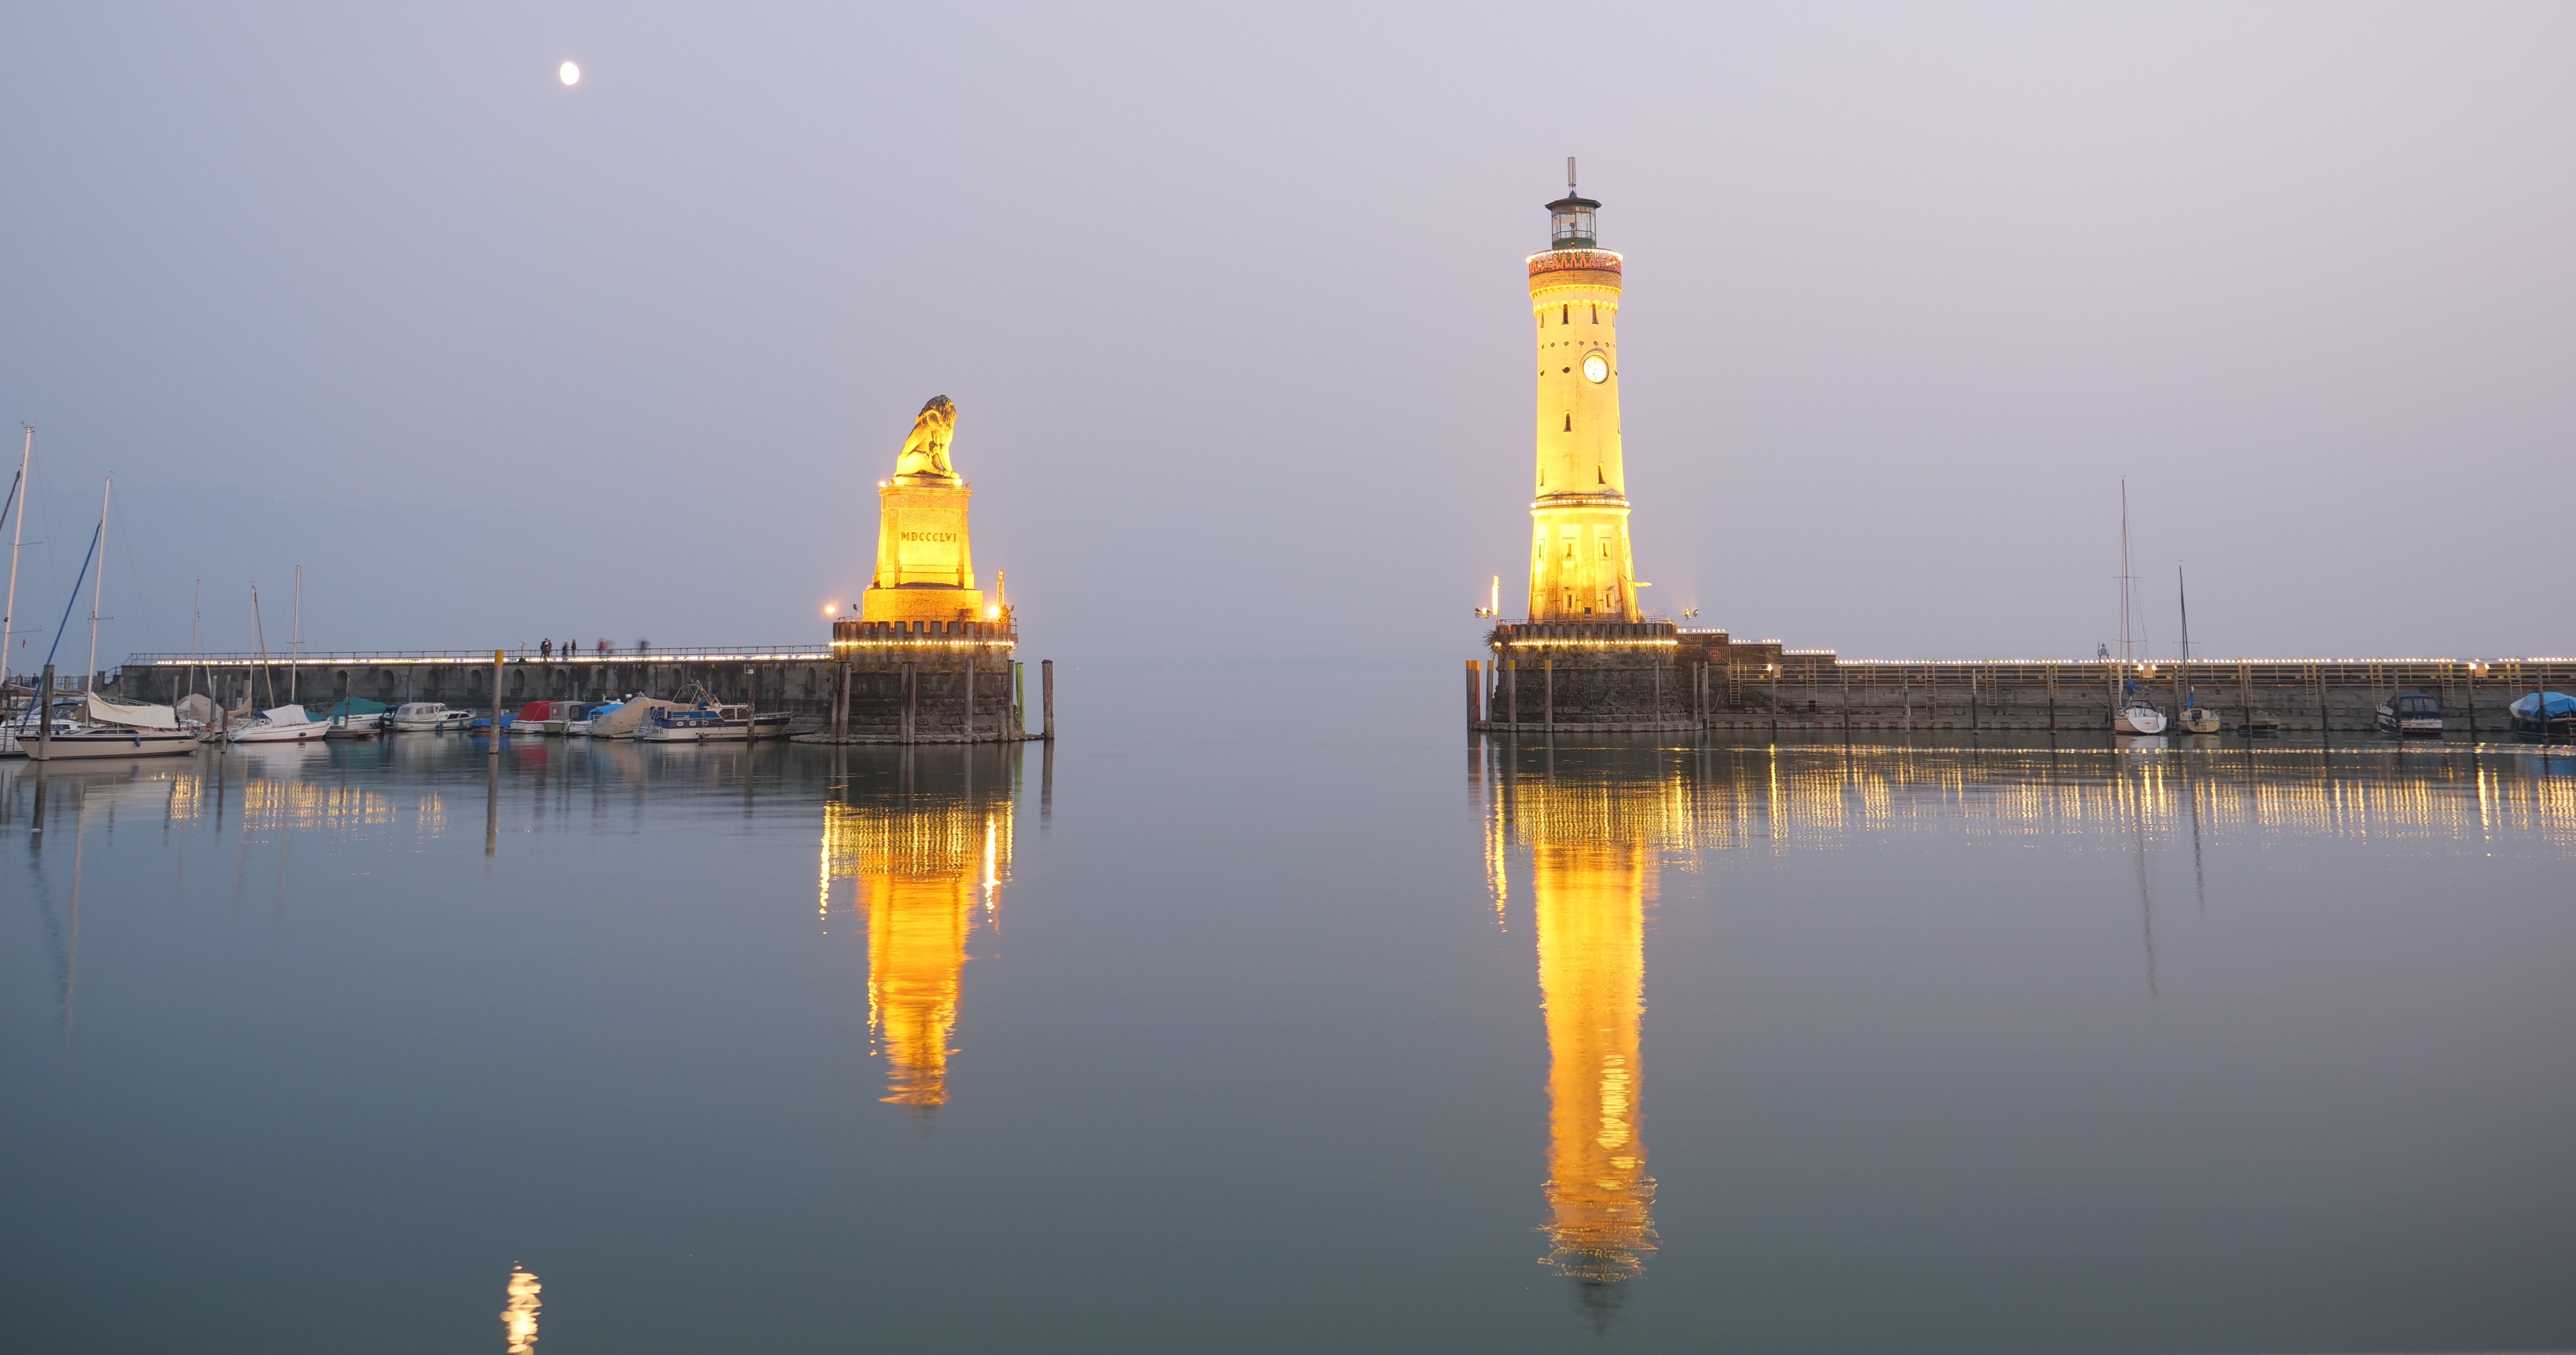 Lighthouse and statue illuminated at dusk